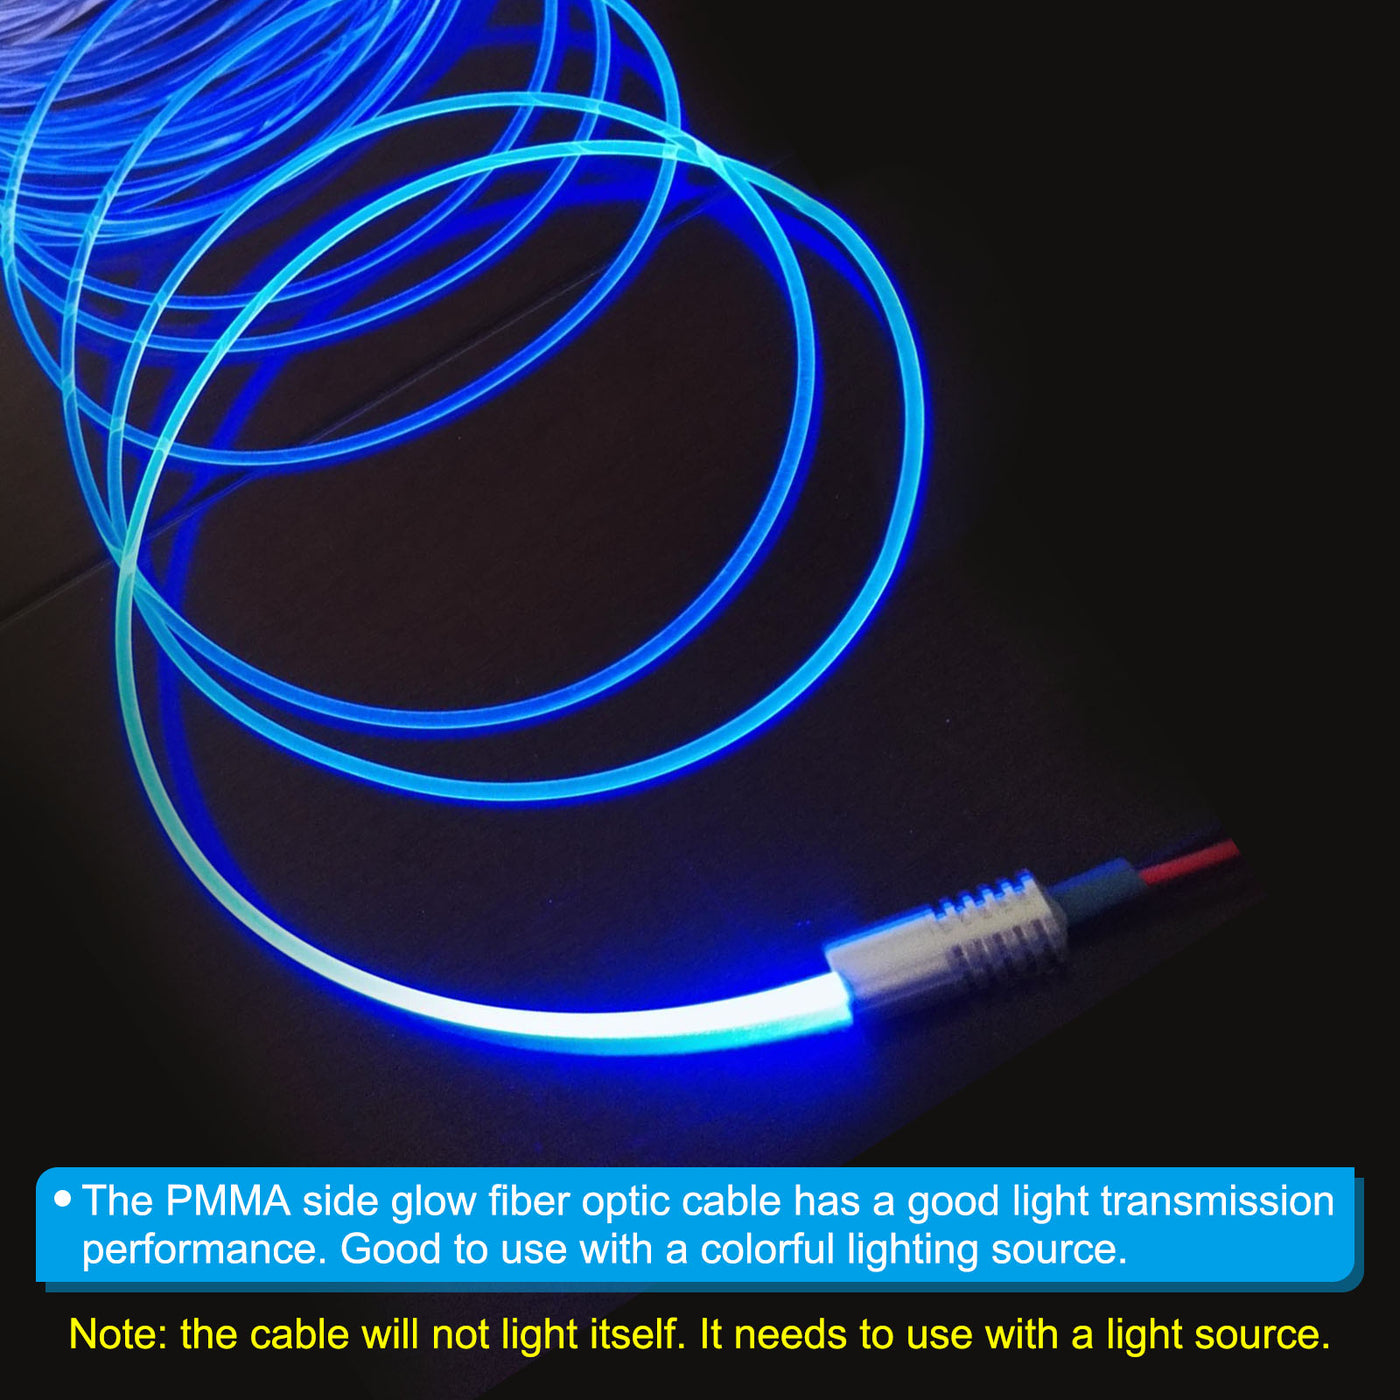 Harfington 4mm 1m PMMA Side Glow Fiber Optic Cable Kit, with LED Aluminum Illuminator 12V 1.5W Guide Light Source Decoration for Home DIY Lighting, Blue